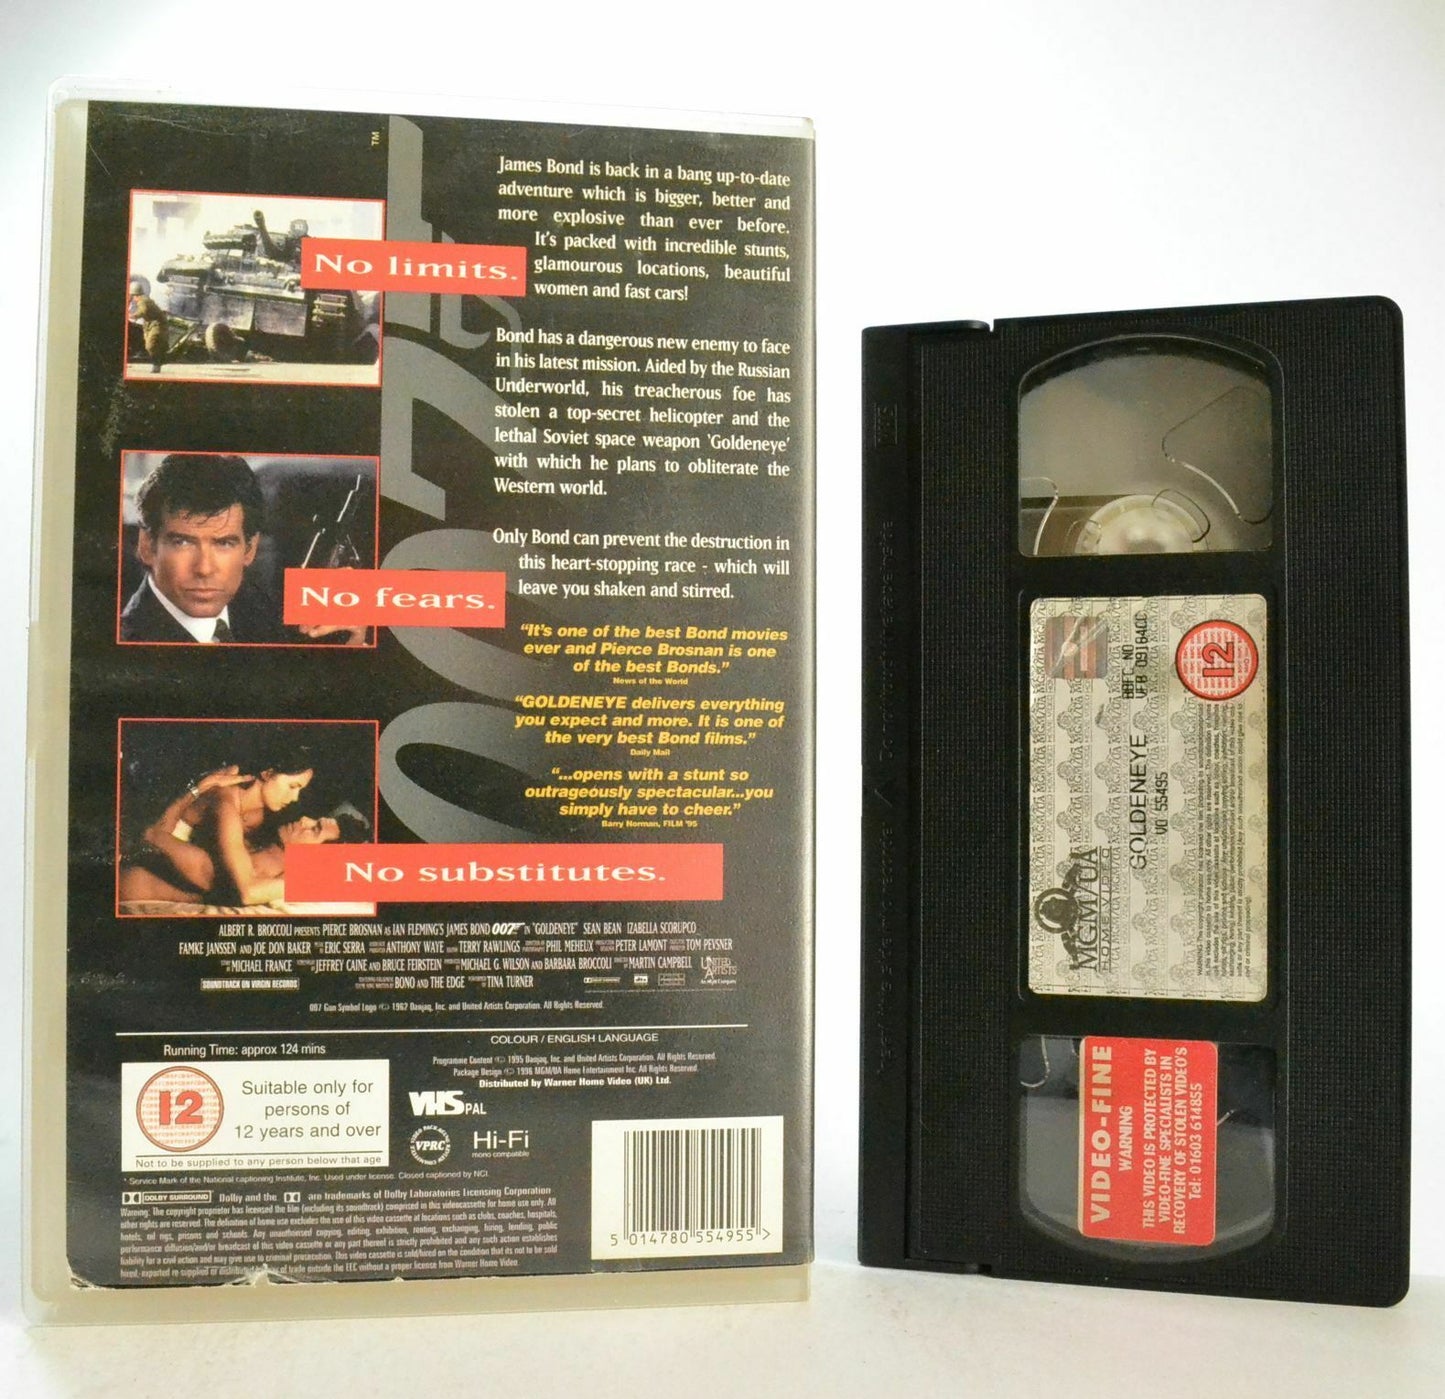 Goldeneye: MGM/UA (1996) - Spy Action - Large Box - James Bond - P.Brosnan - VHS-